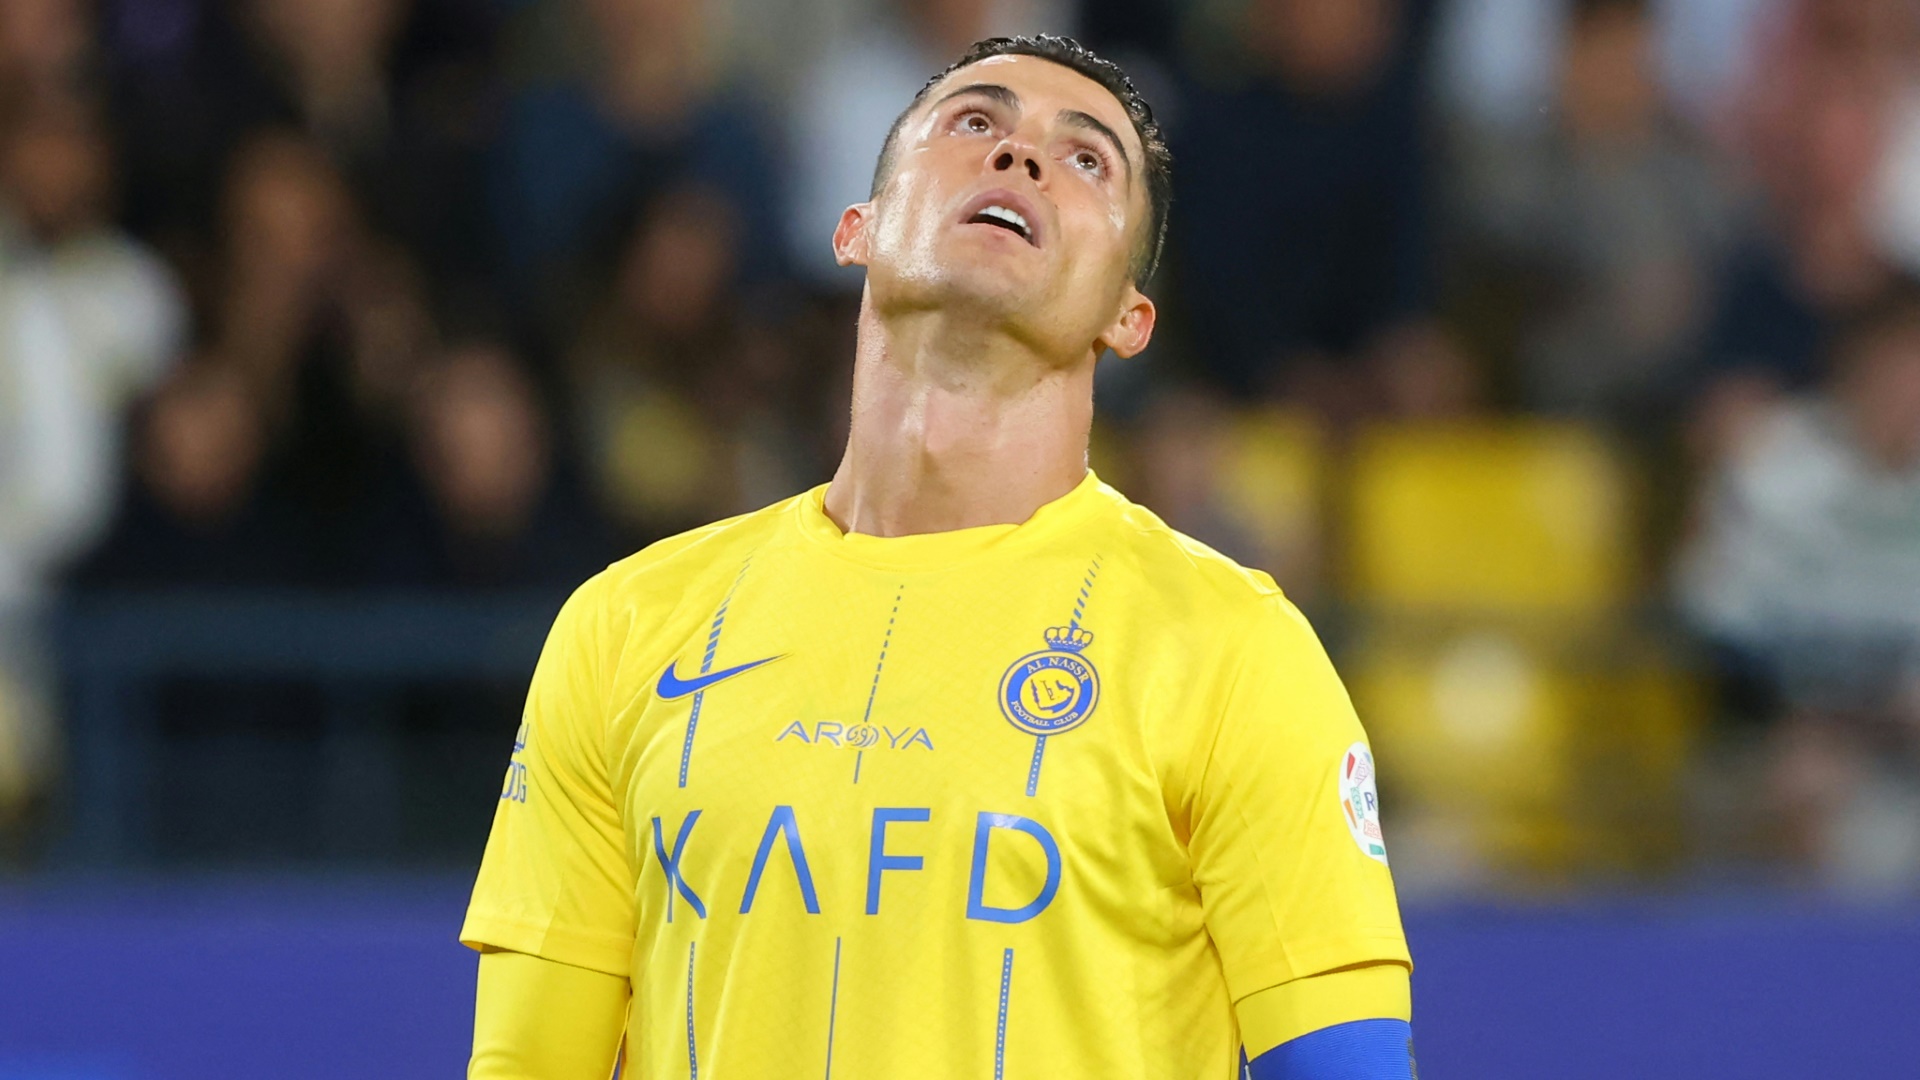 Verliert die Nervem: Cristiano Ronaldo